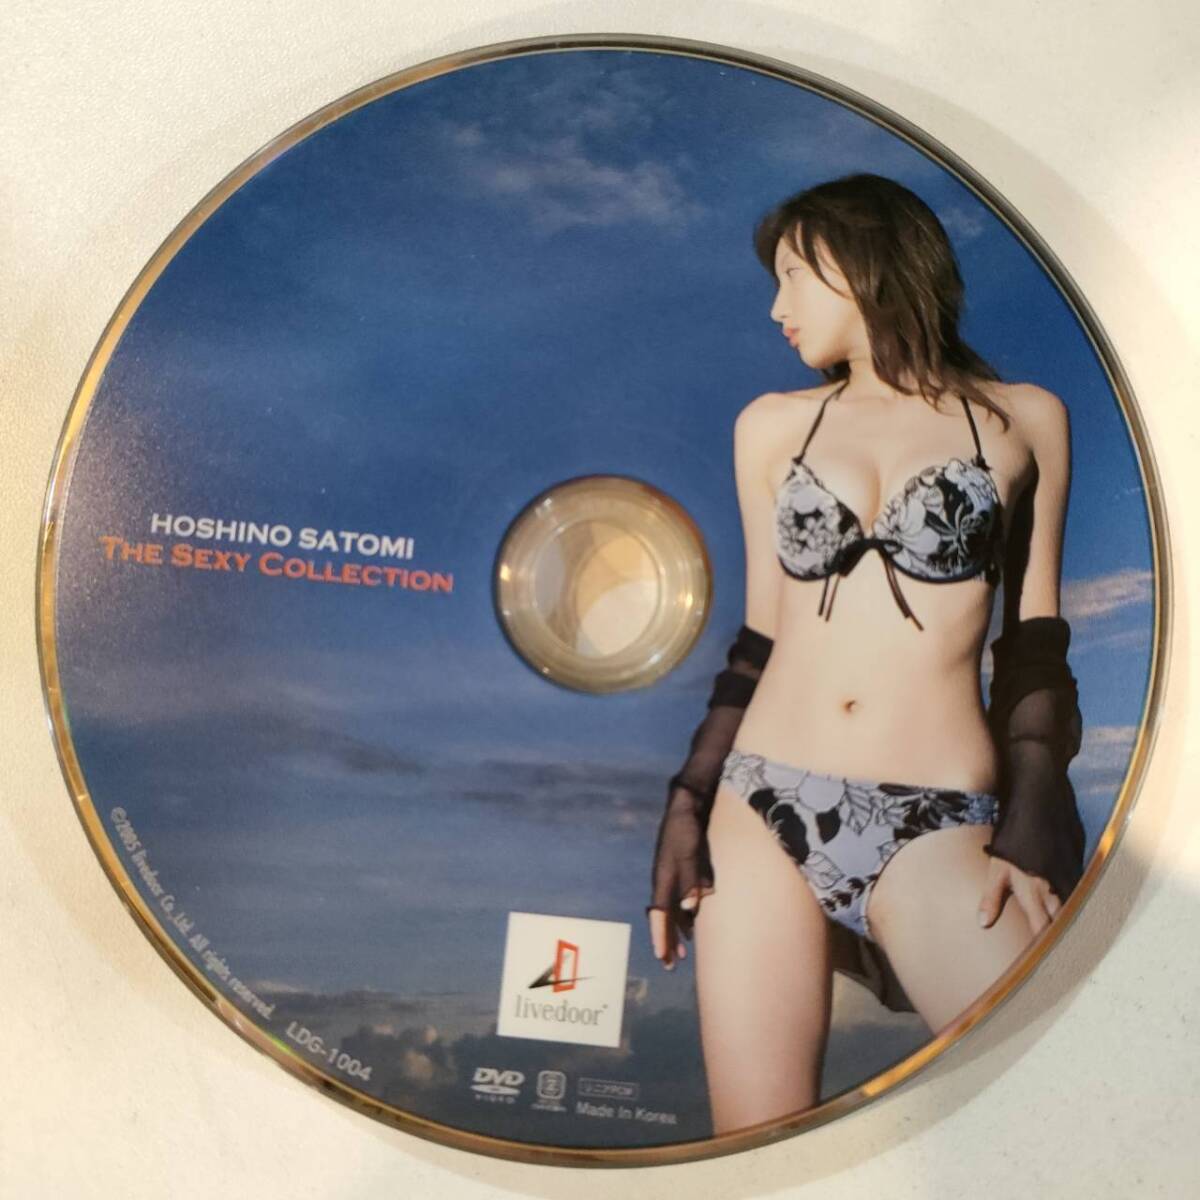 discのみ 廃盤 IV 星野智満 『THE SEXY COLLECTION』 Livedoor DVD 過激 セル 中古 アイドル グラビア 着エロ ランジェリー 下着の画像1